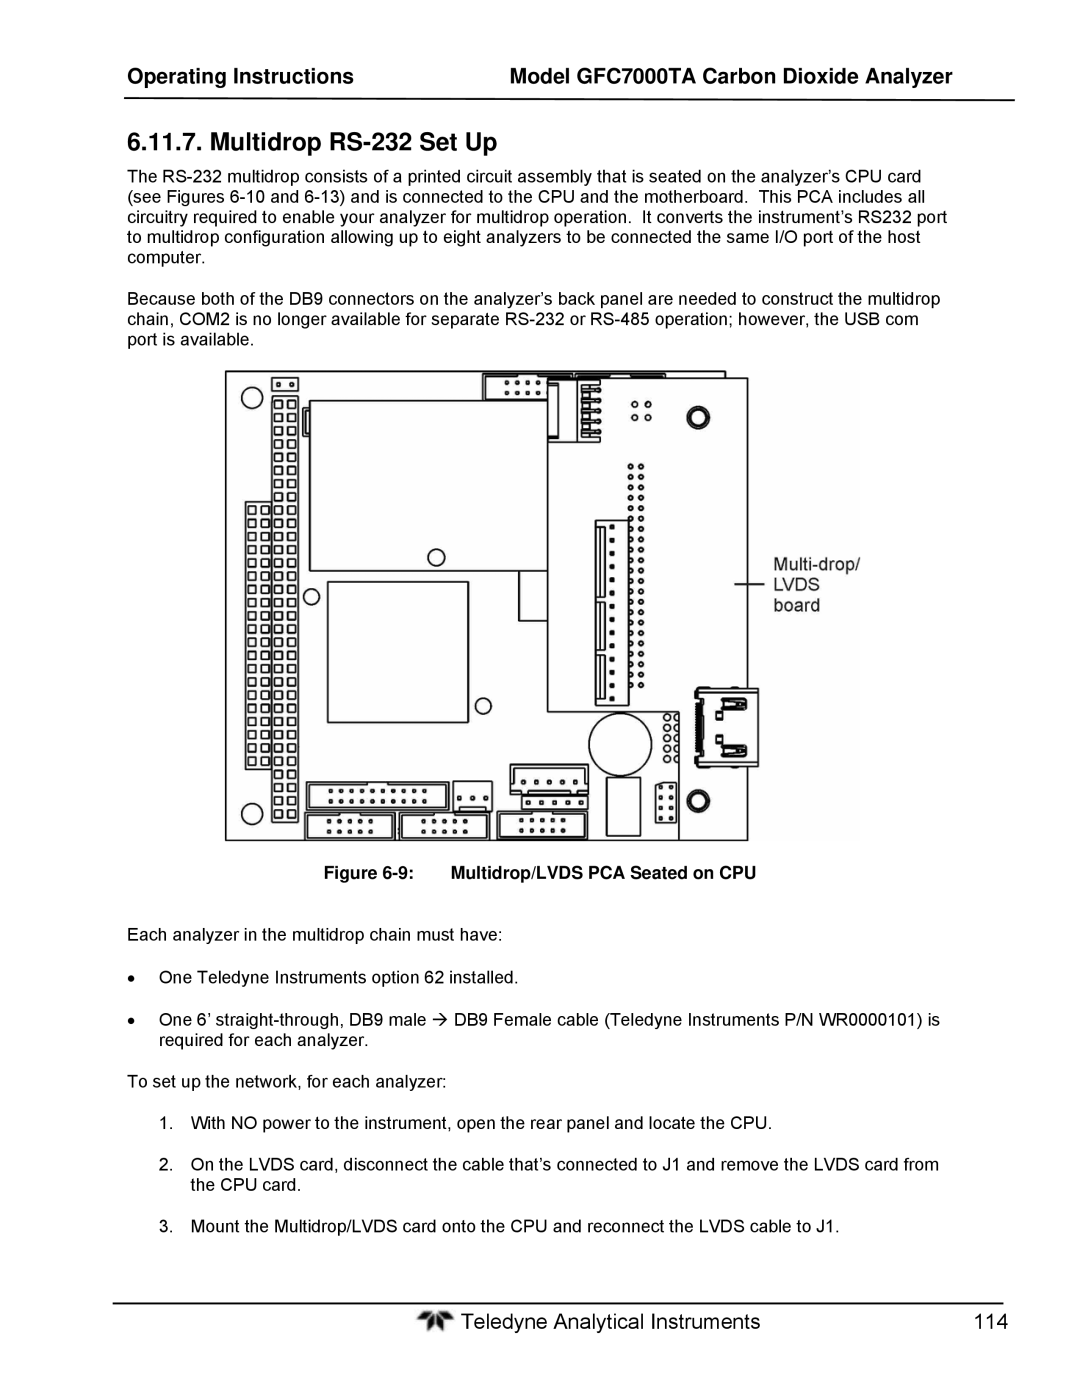 Teledyne gfc 7000ta operation manual Multidrop RS-232 Set Up, Multidrop/LVDS PCA Seated on CPU 